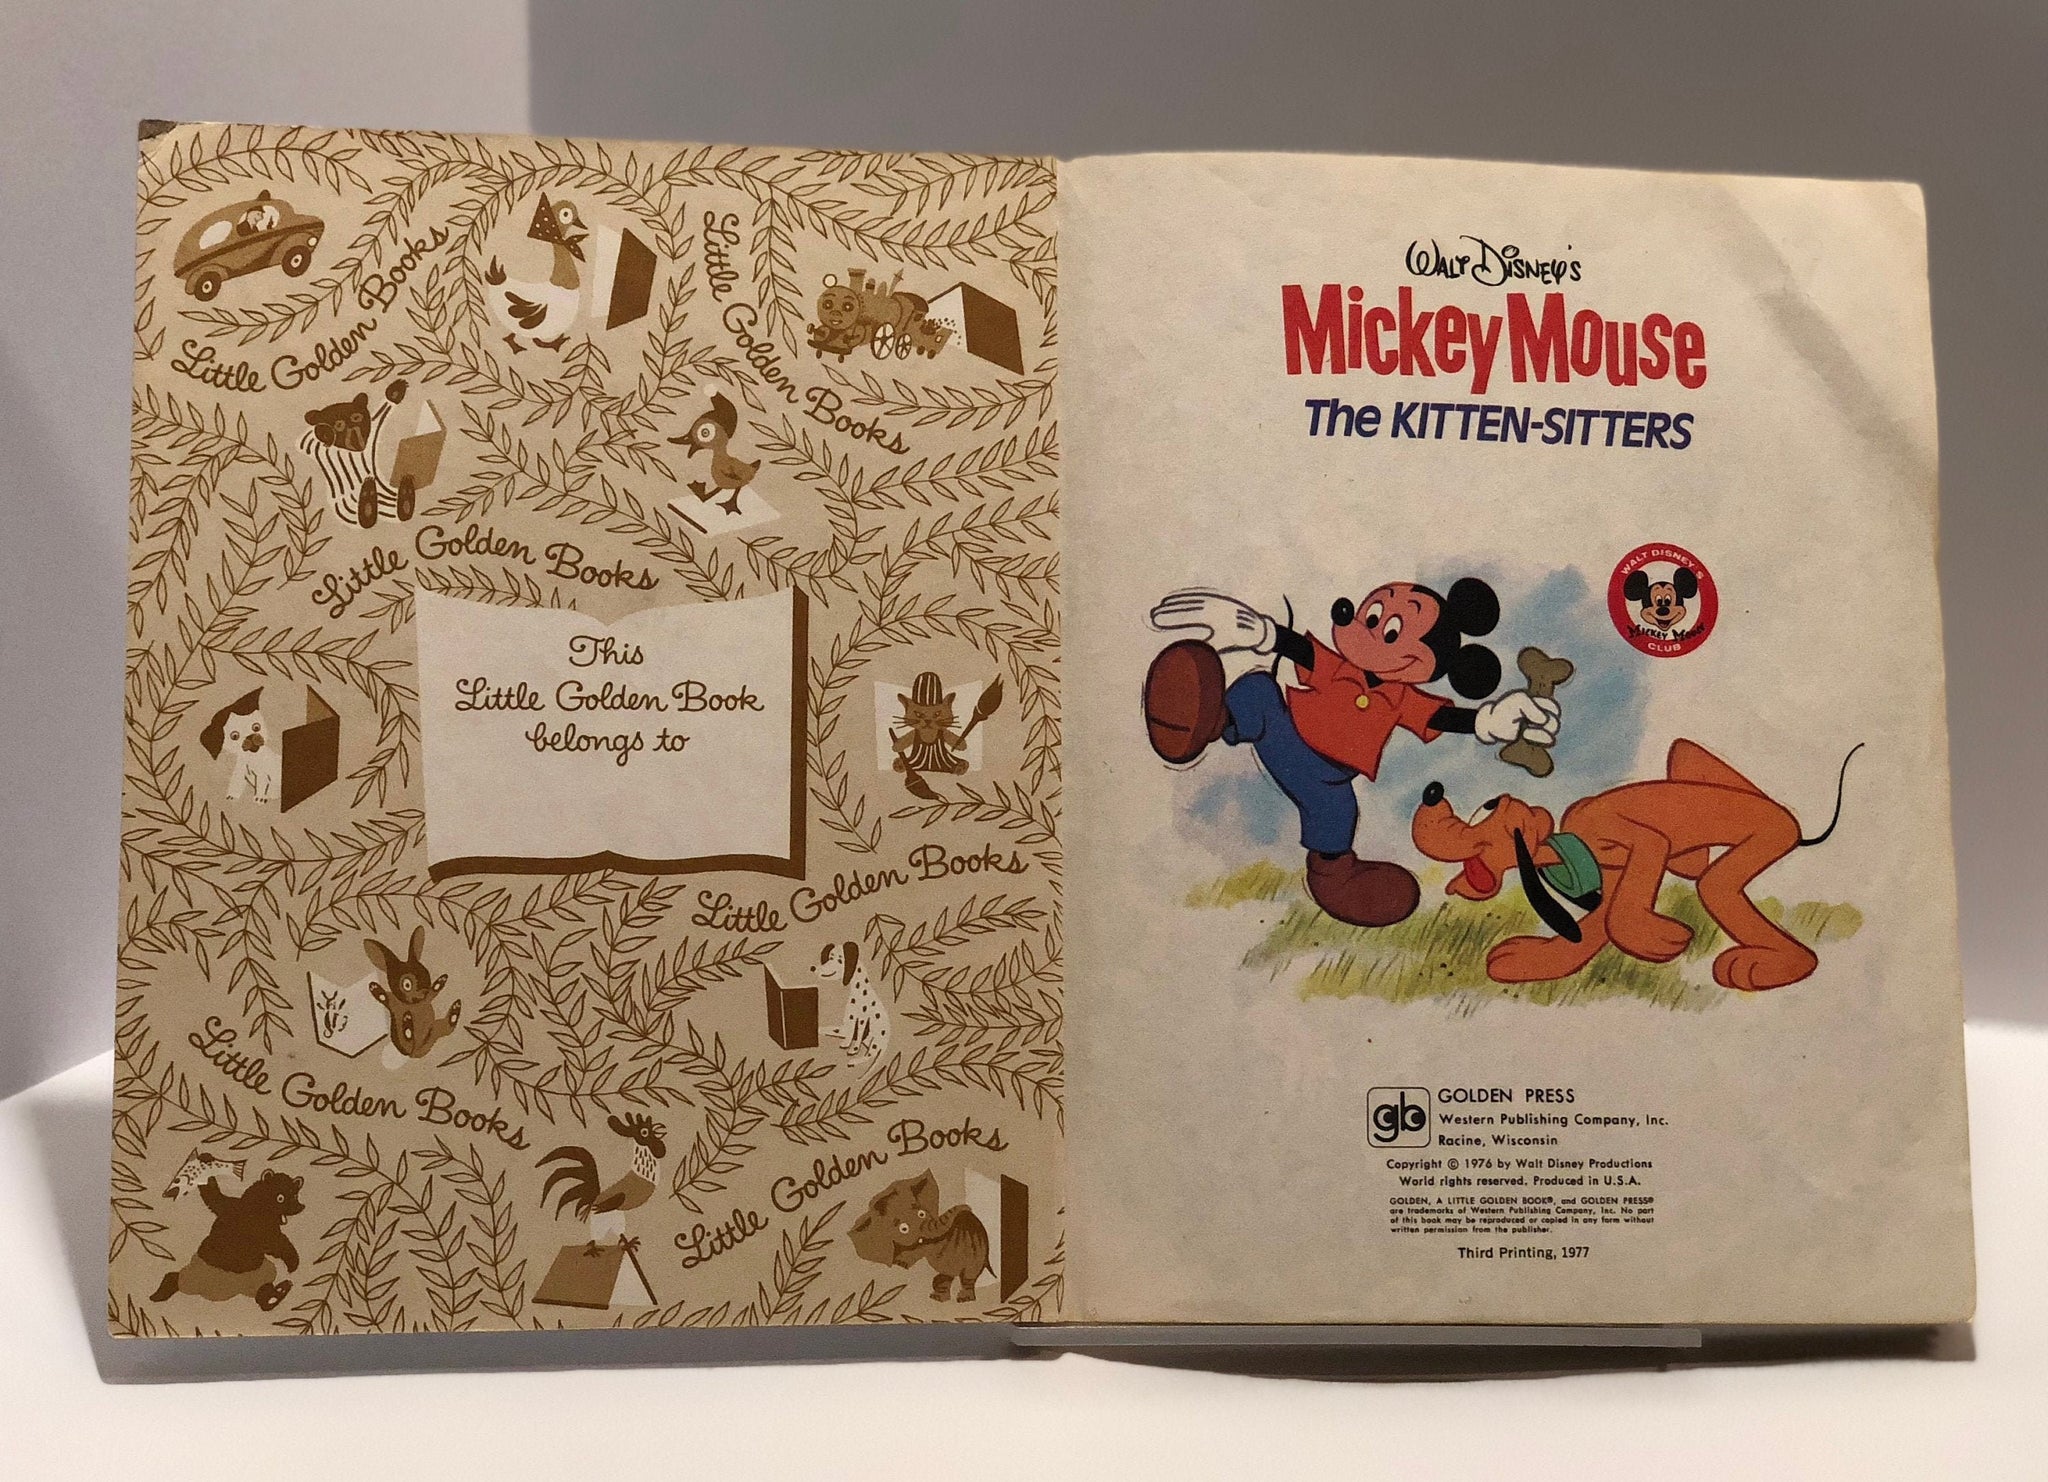 Disney, Office, Mickey Mouse Disney Photo Album